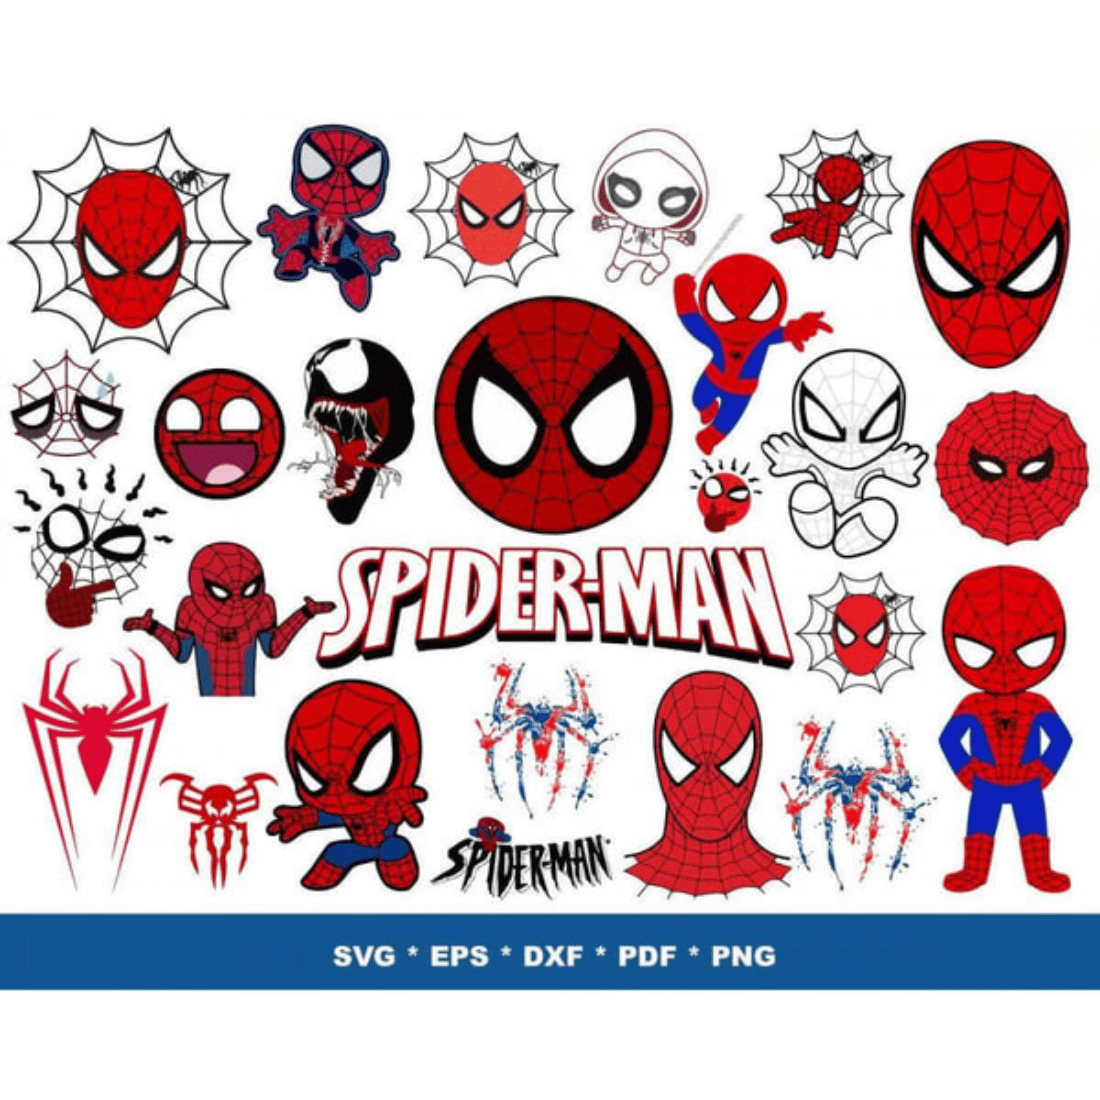 Spiderman SVG, Spiderman Symbol, Spiderman Logo, Spiderman Silhouette, Spiderman PNG, Spiderman Transparent preview image.